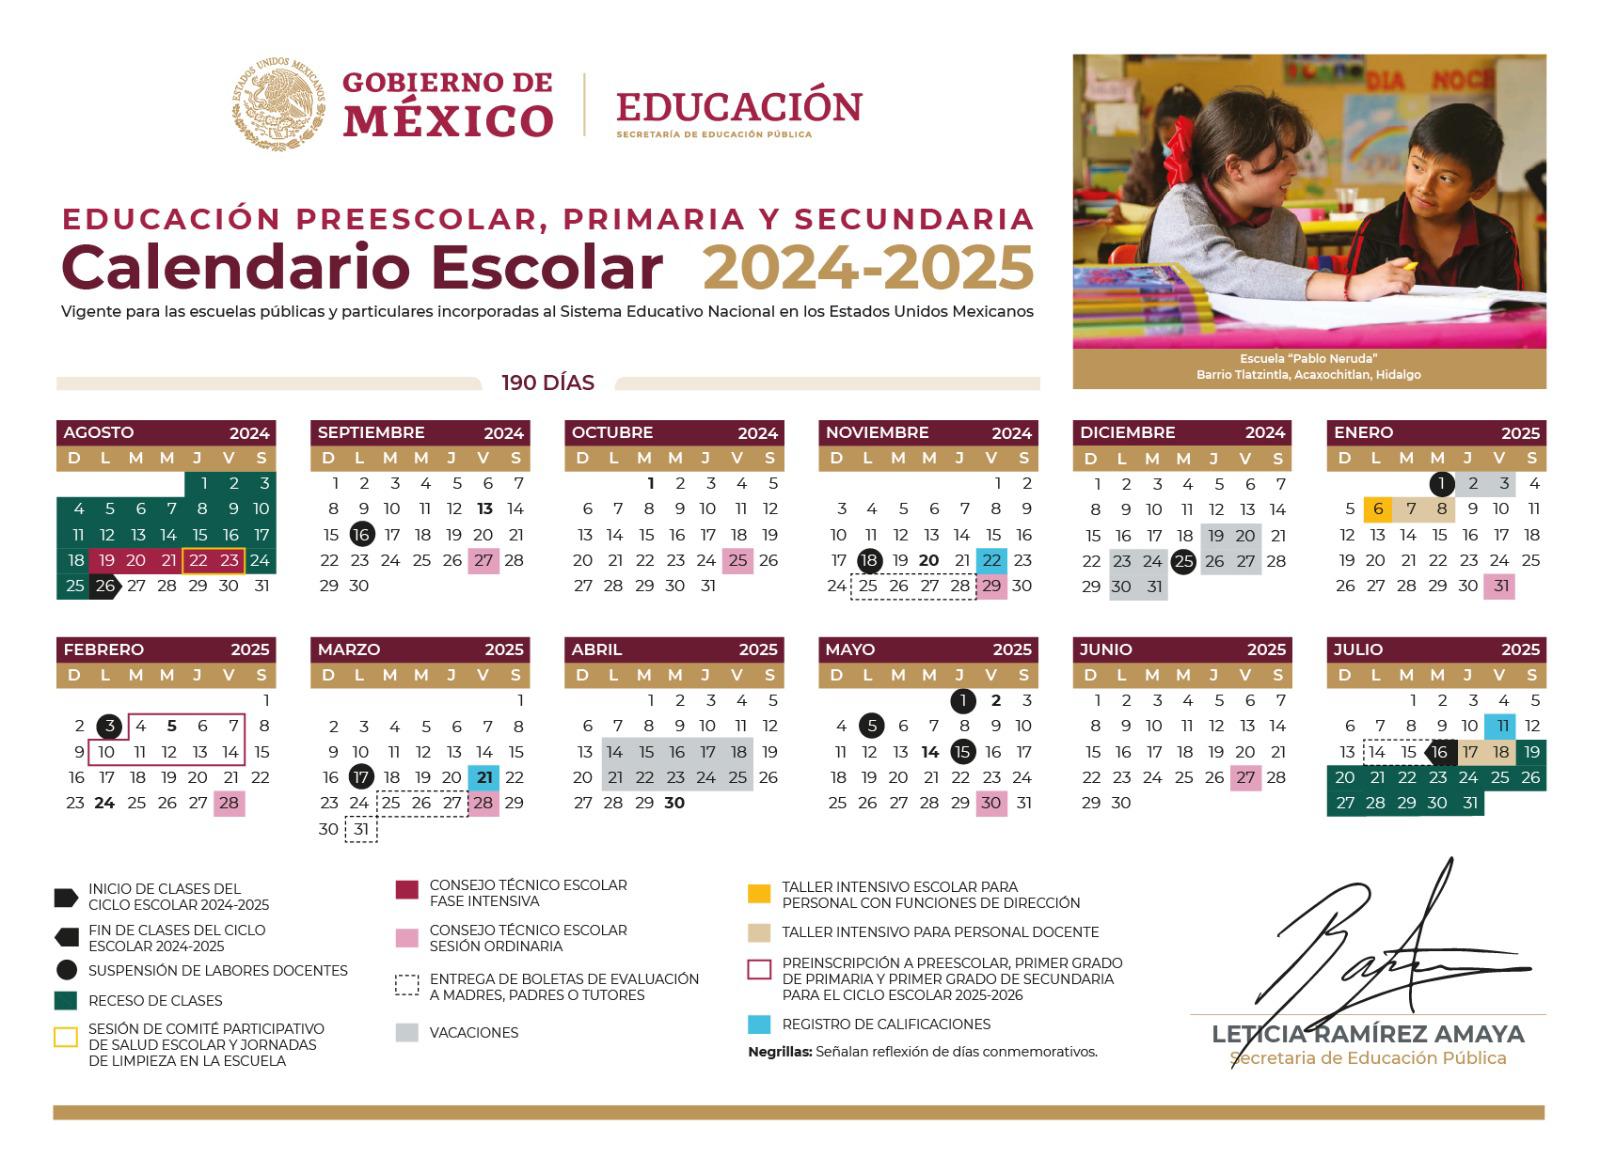 $!SEP publica calendario escolar 2024-2025 para preescolar, primaria y secundaria